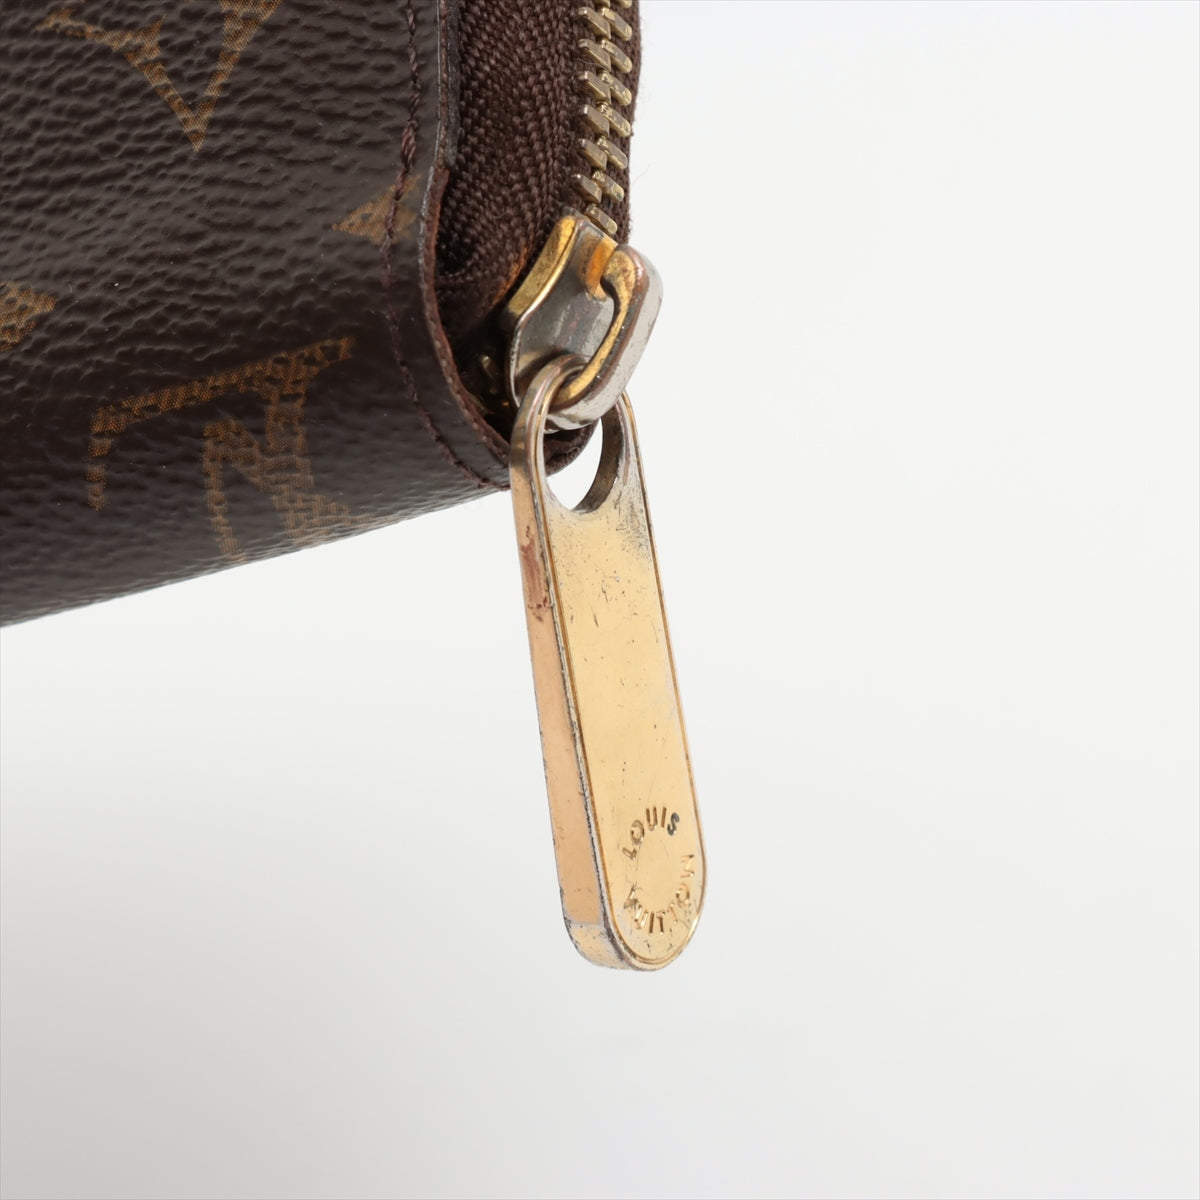 Pre-owned Louis Vuitton Monogram Zippy Wallet M42616 Gi2179 Brown